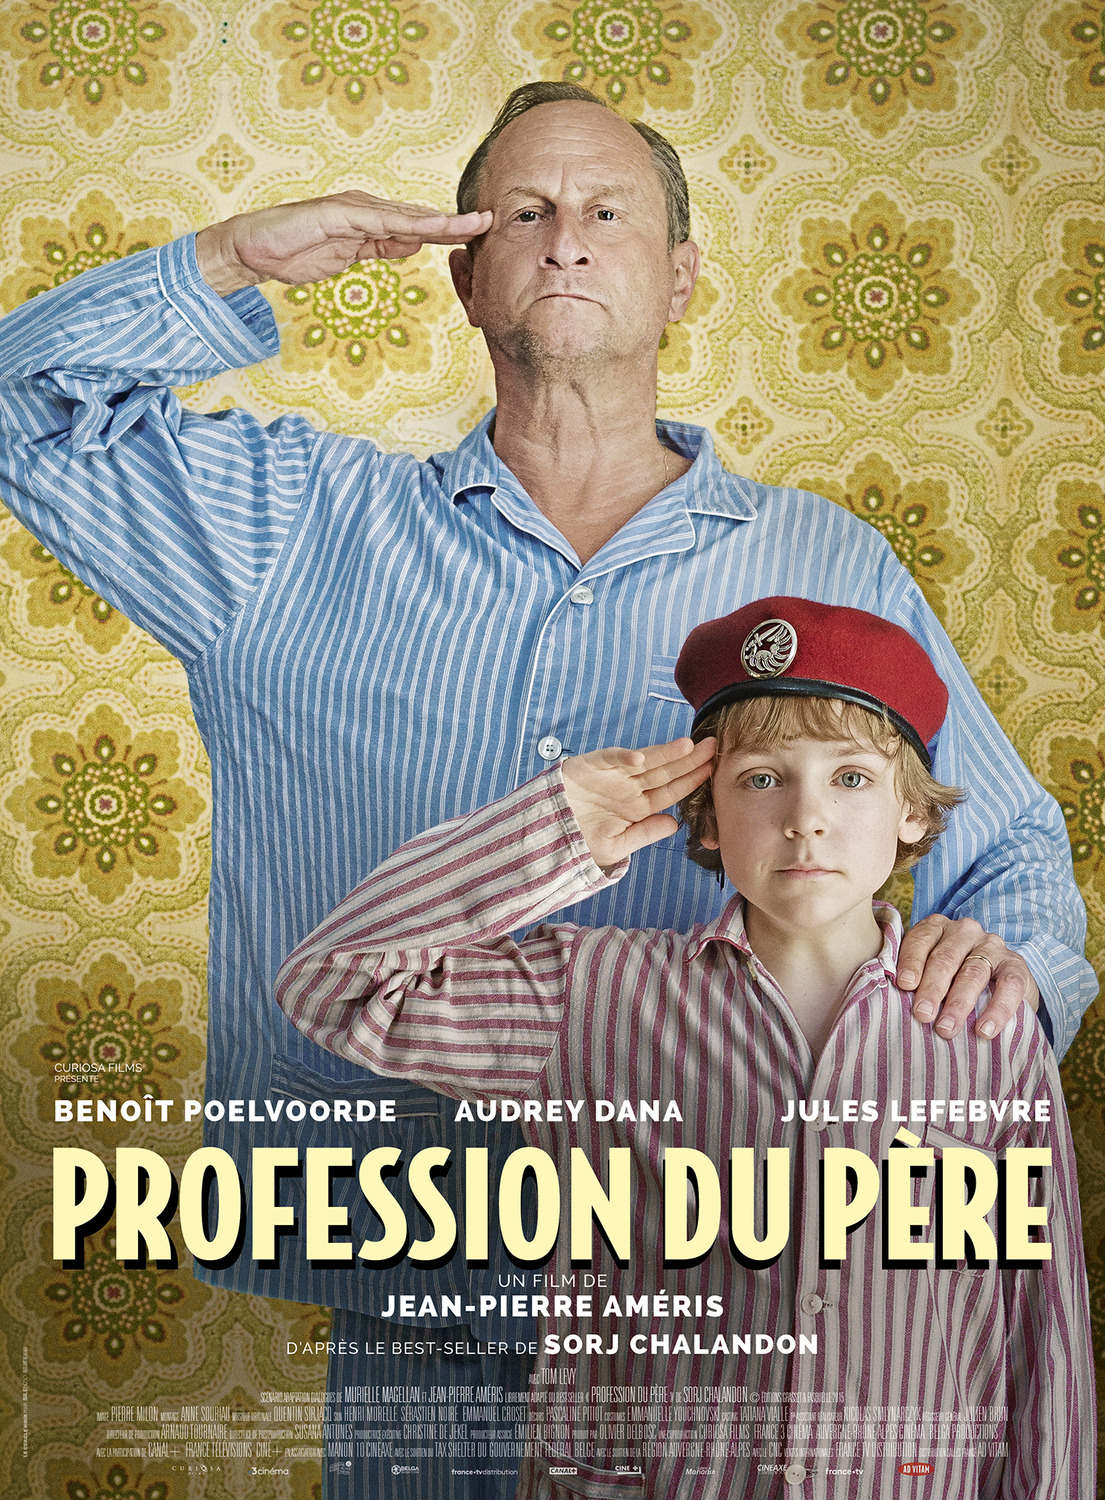 Extra Large Movie Poster Image for Profession du père 